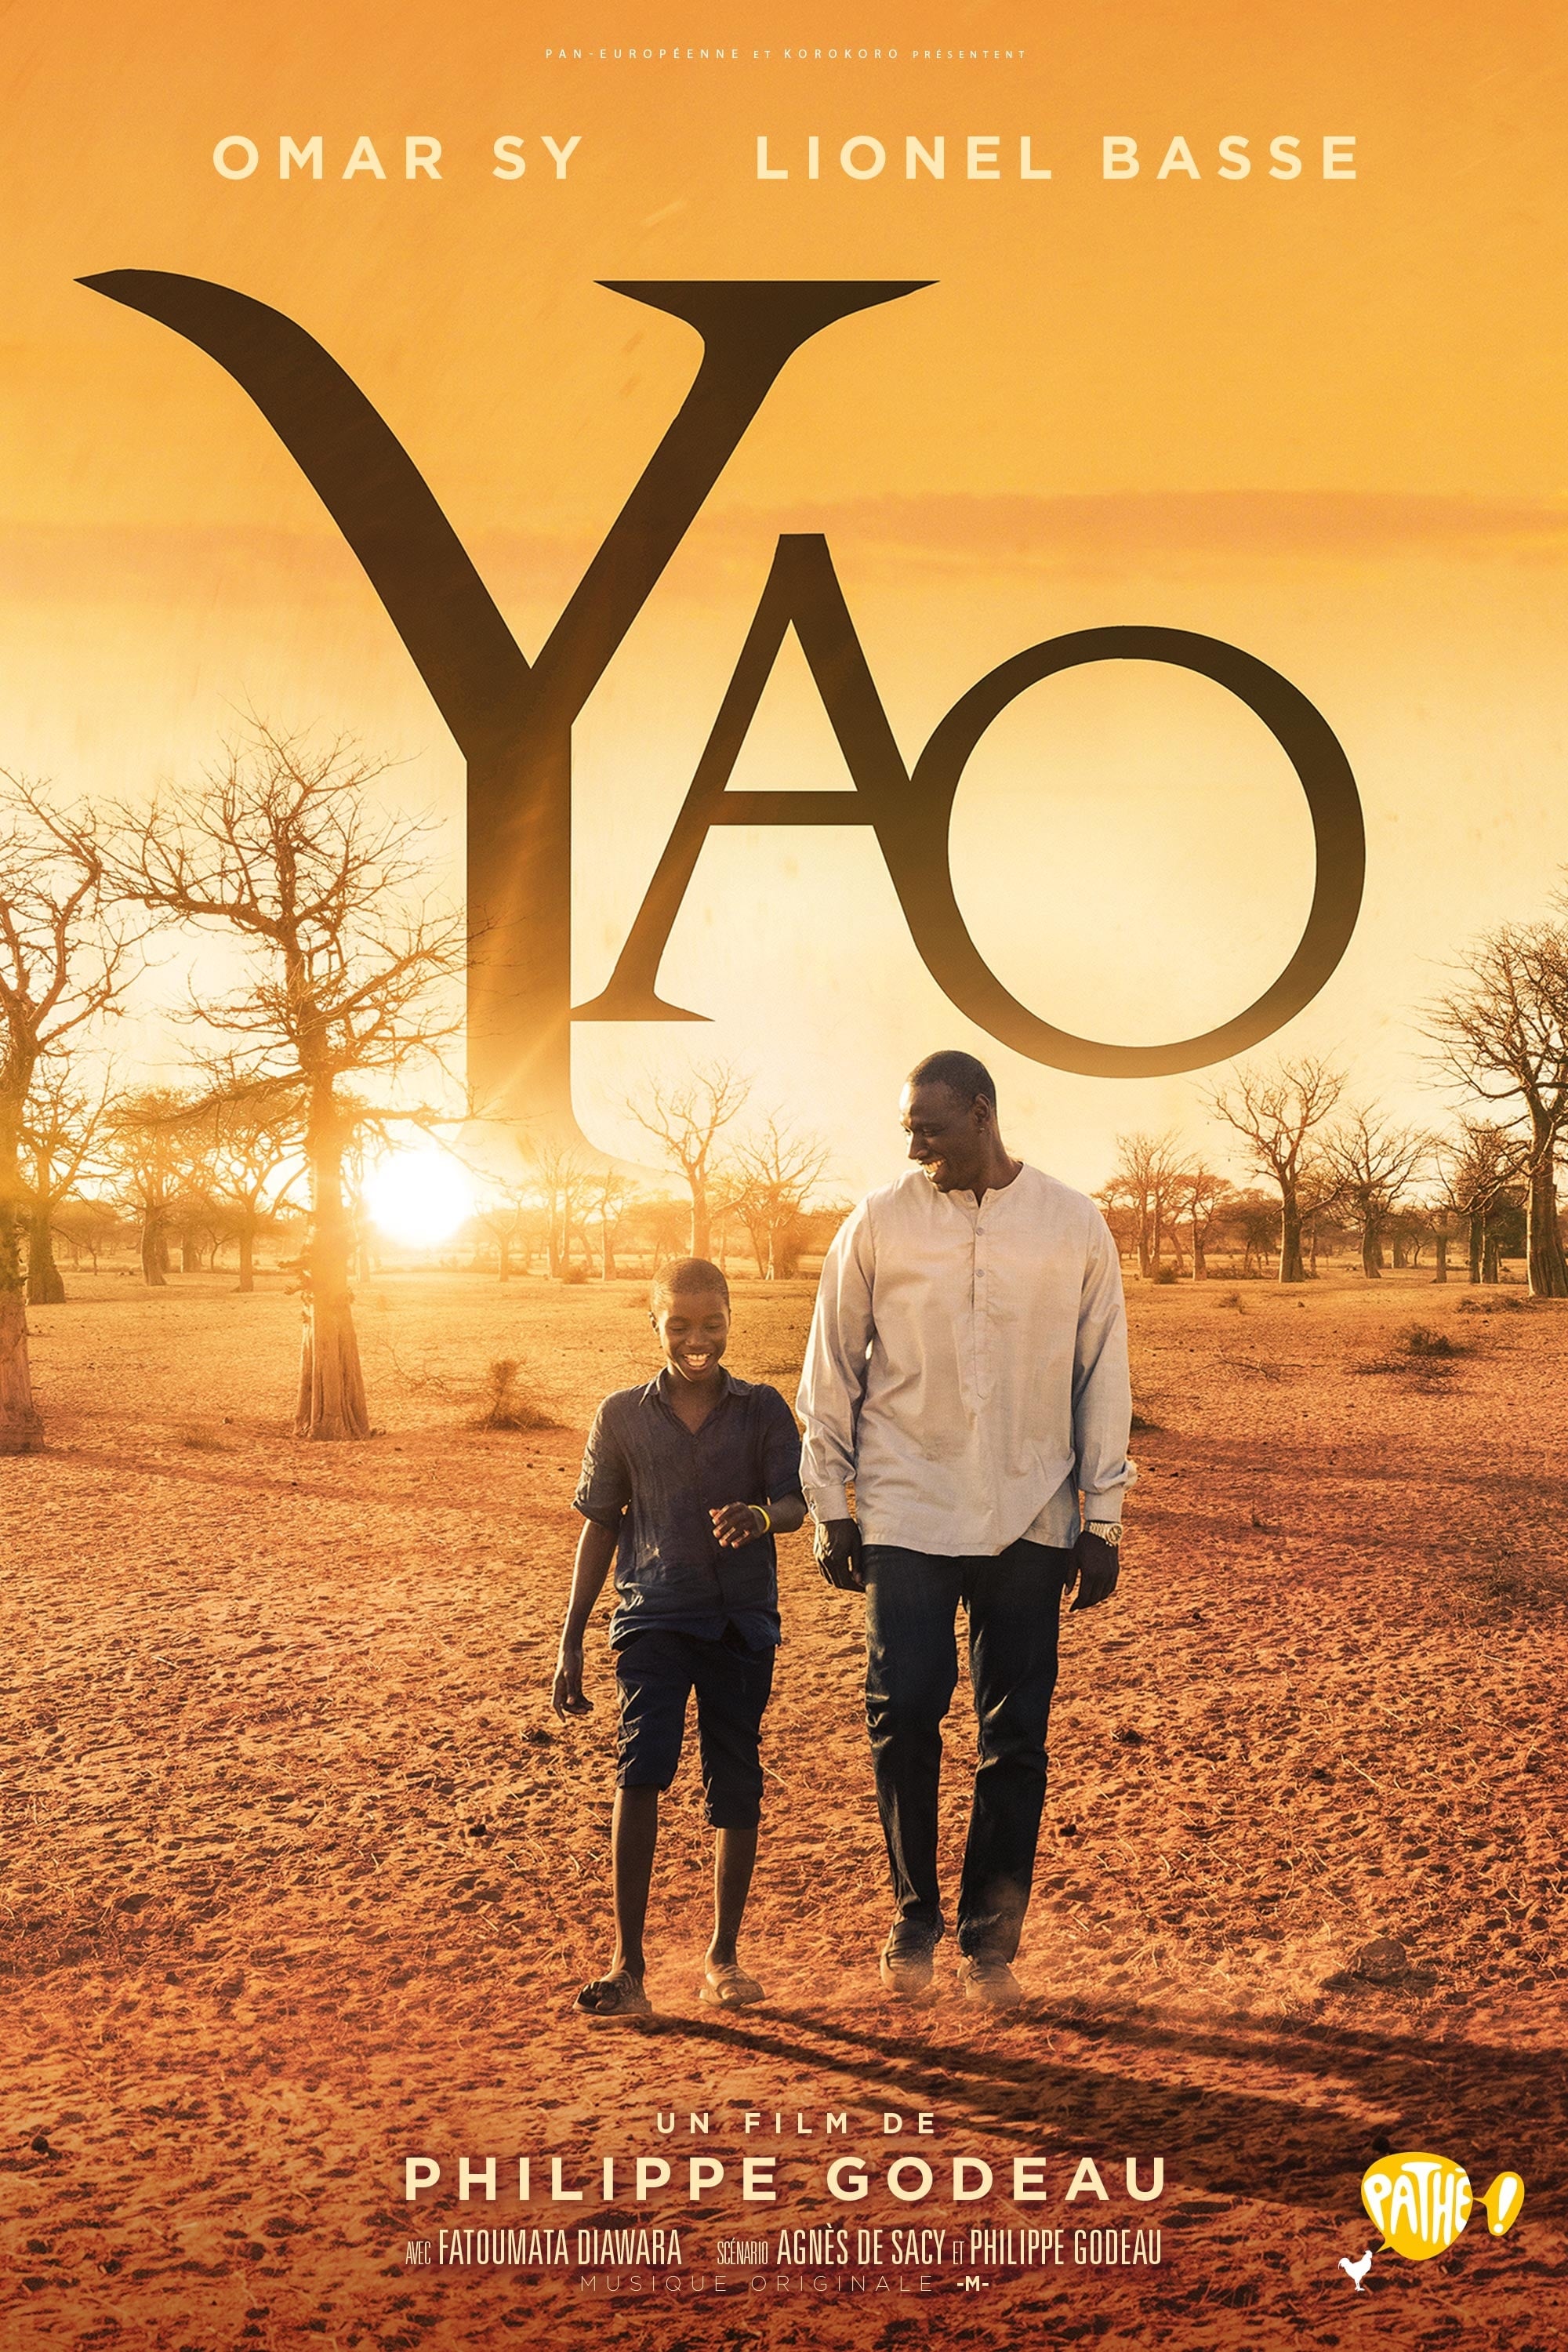 Affiche du film "Yao"